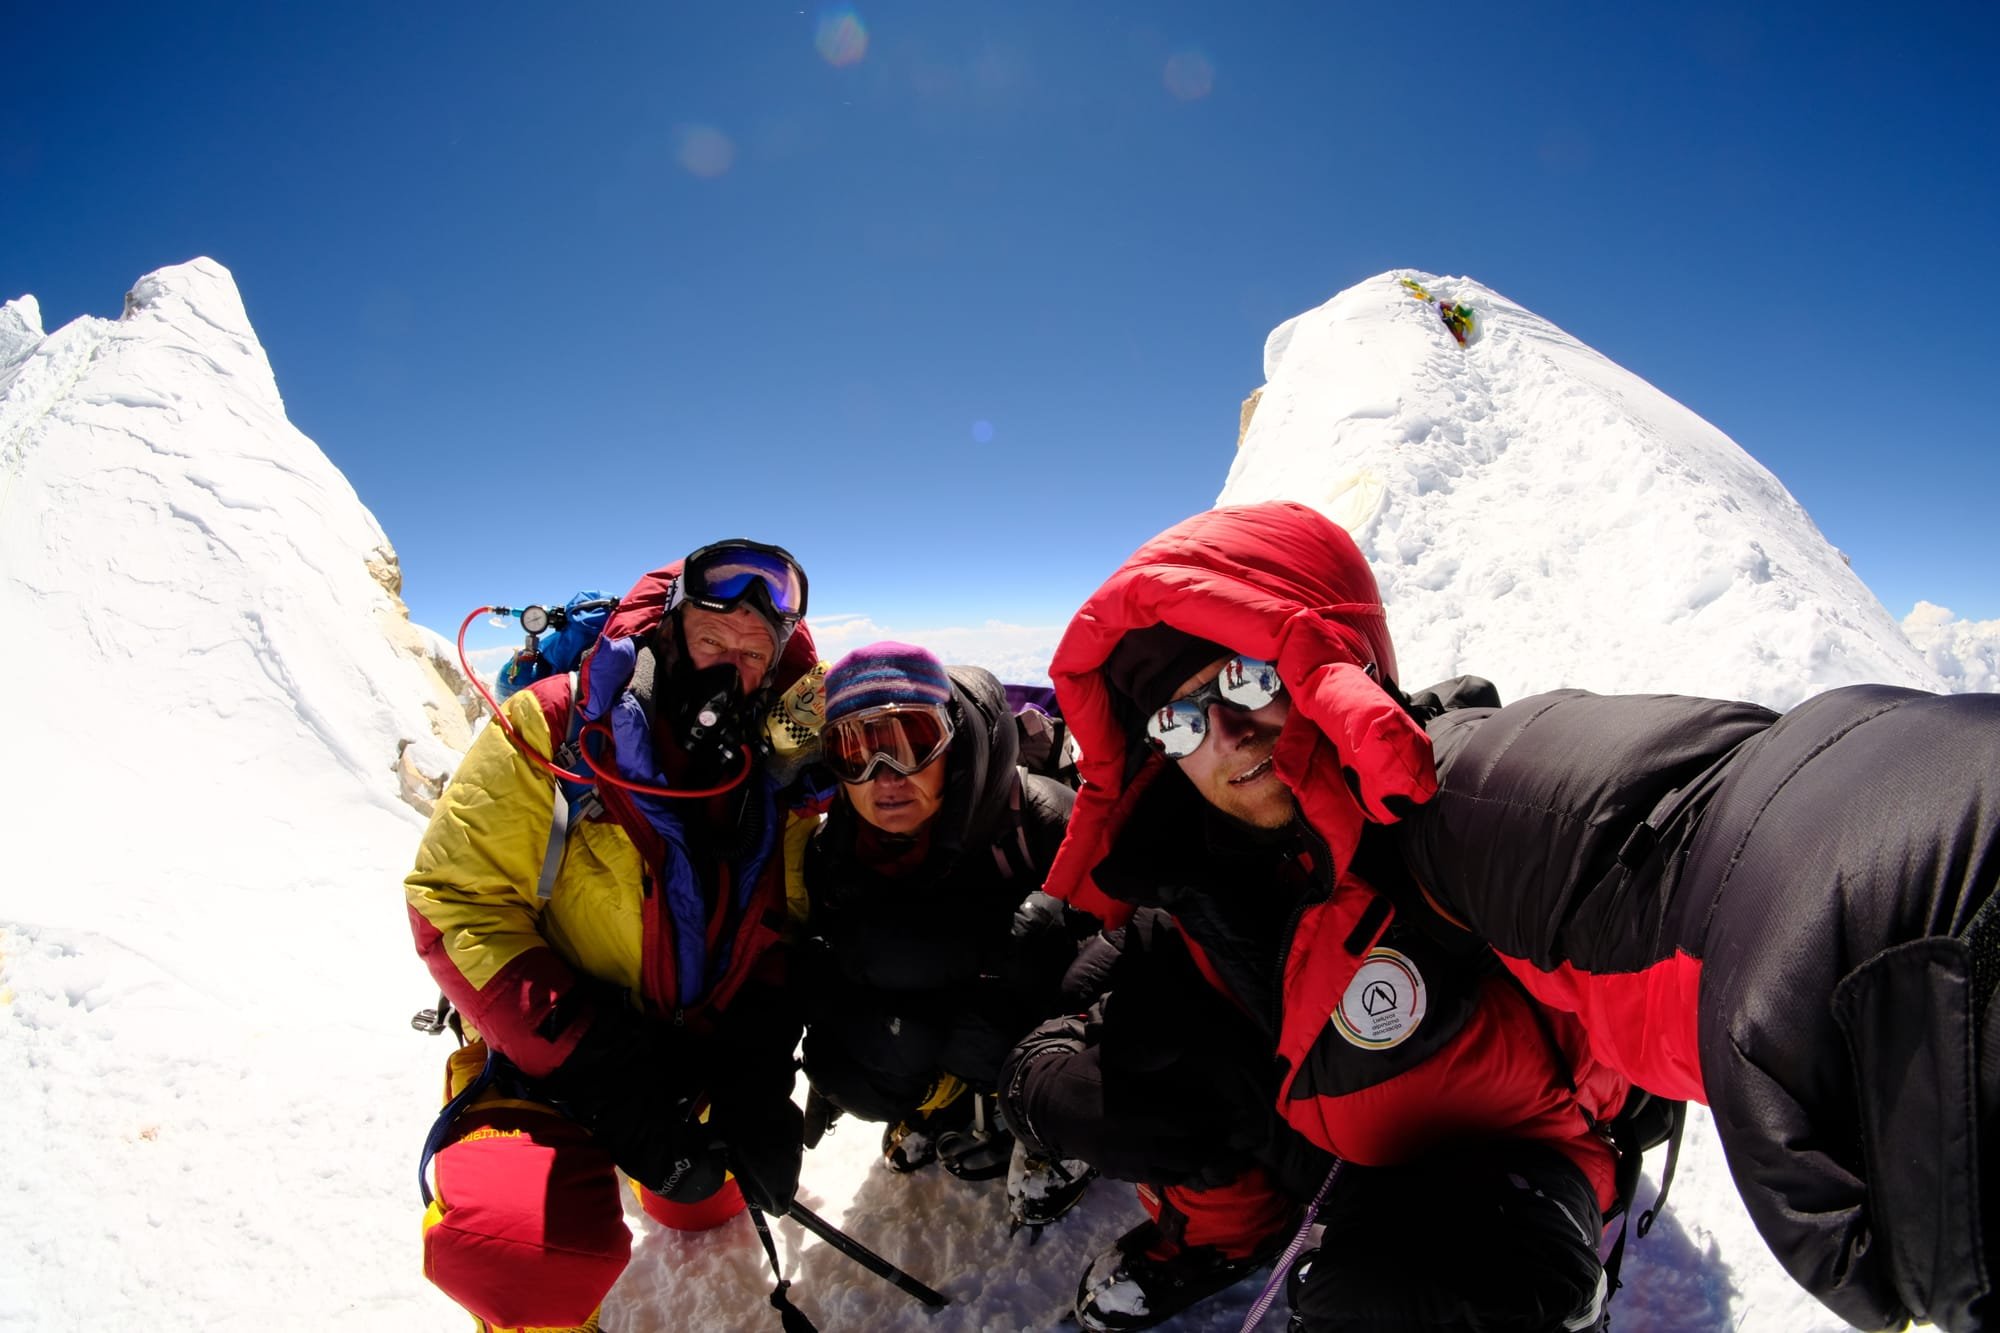 Manaslu climbing expedition 8163- 2016